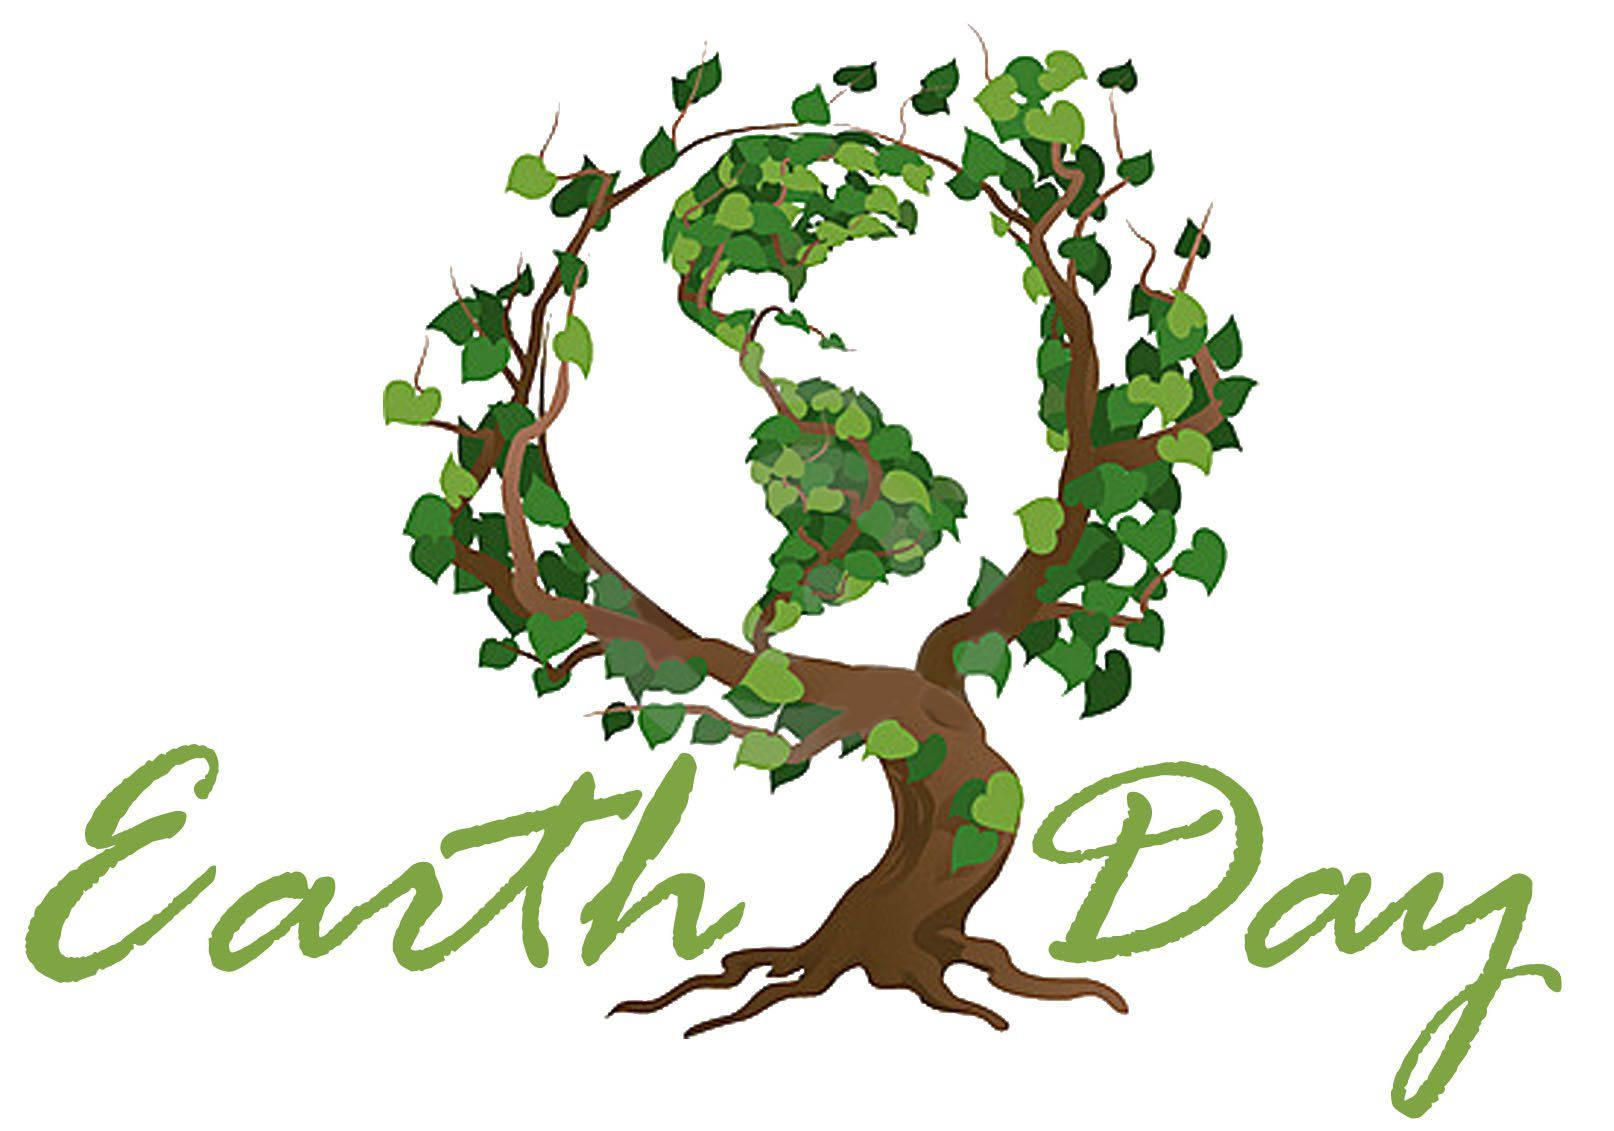 Earth Day Tree Digital Art Wallpaper